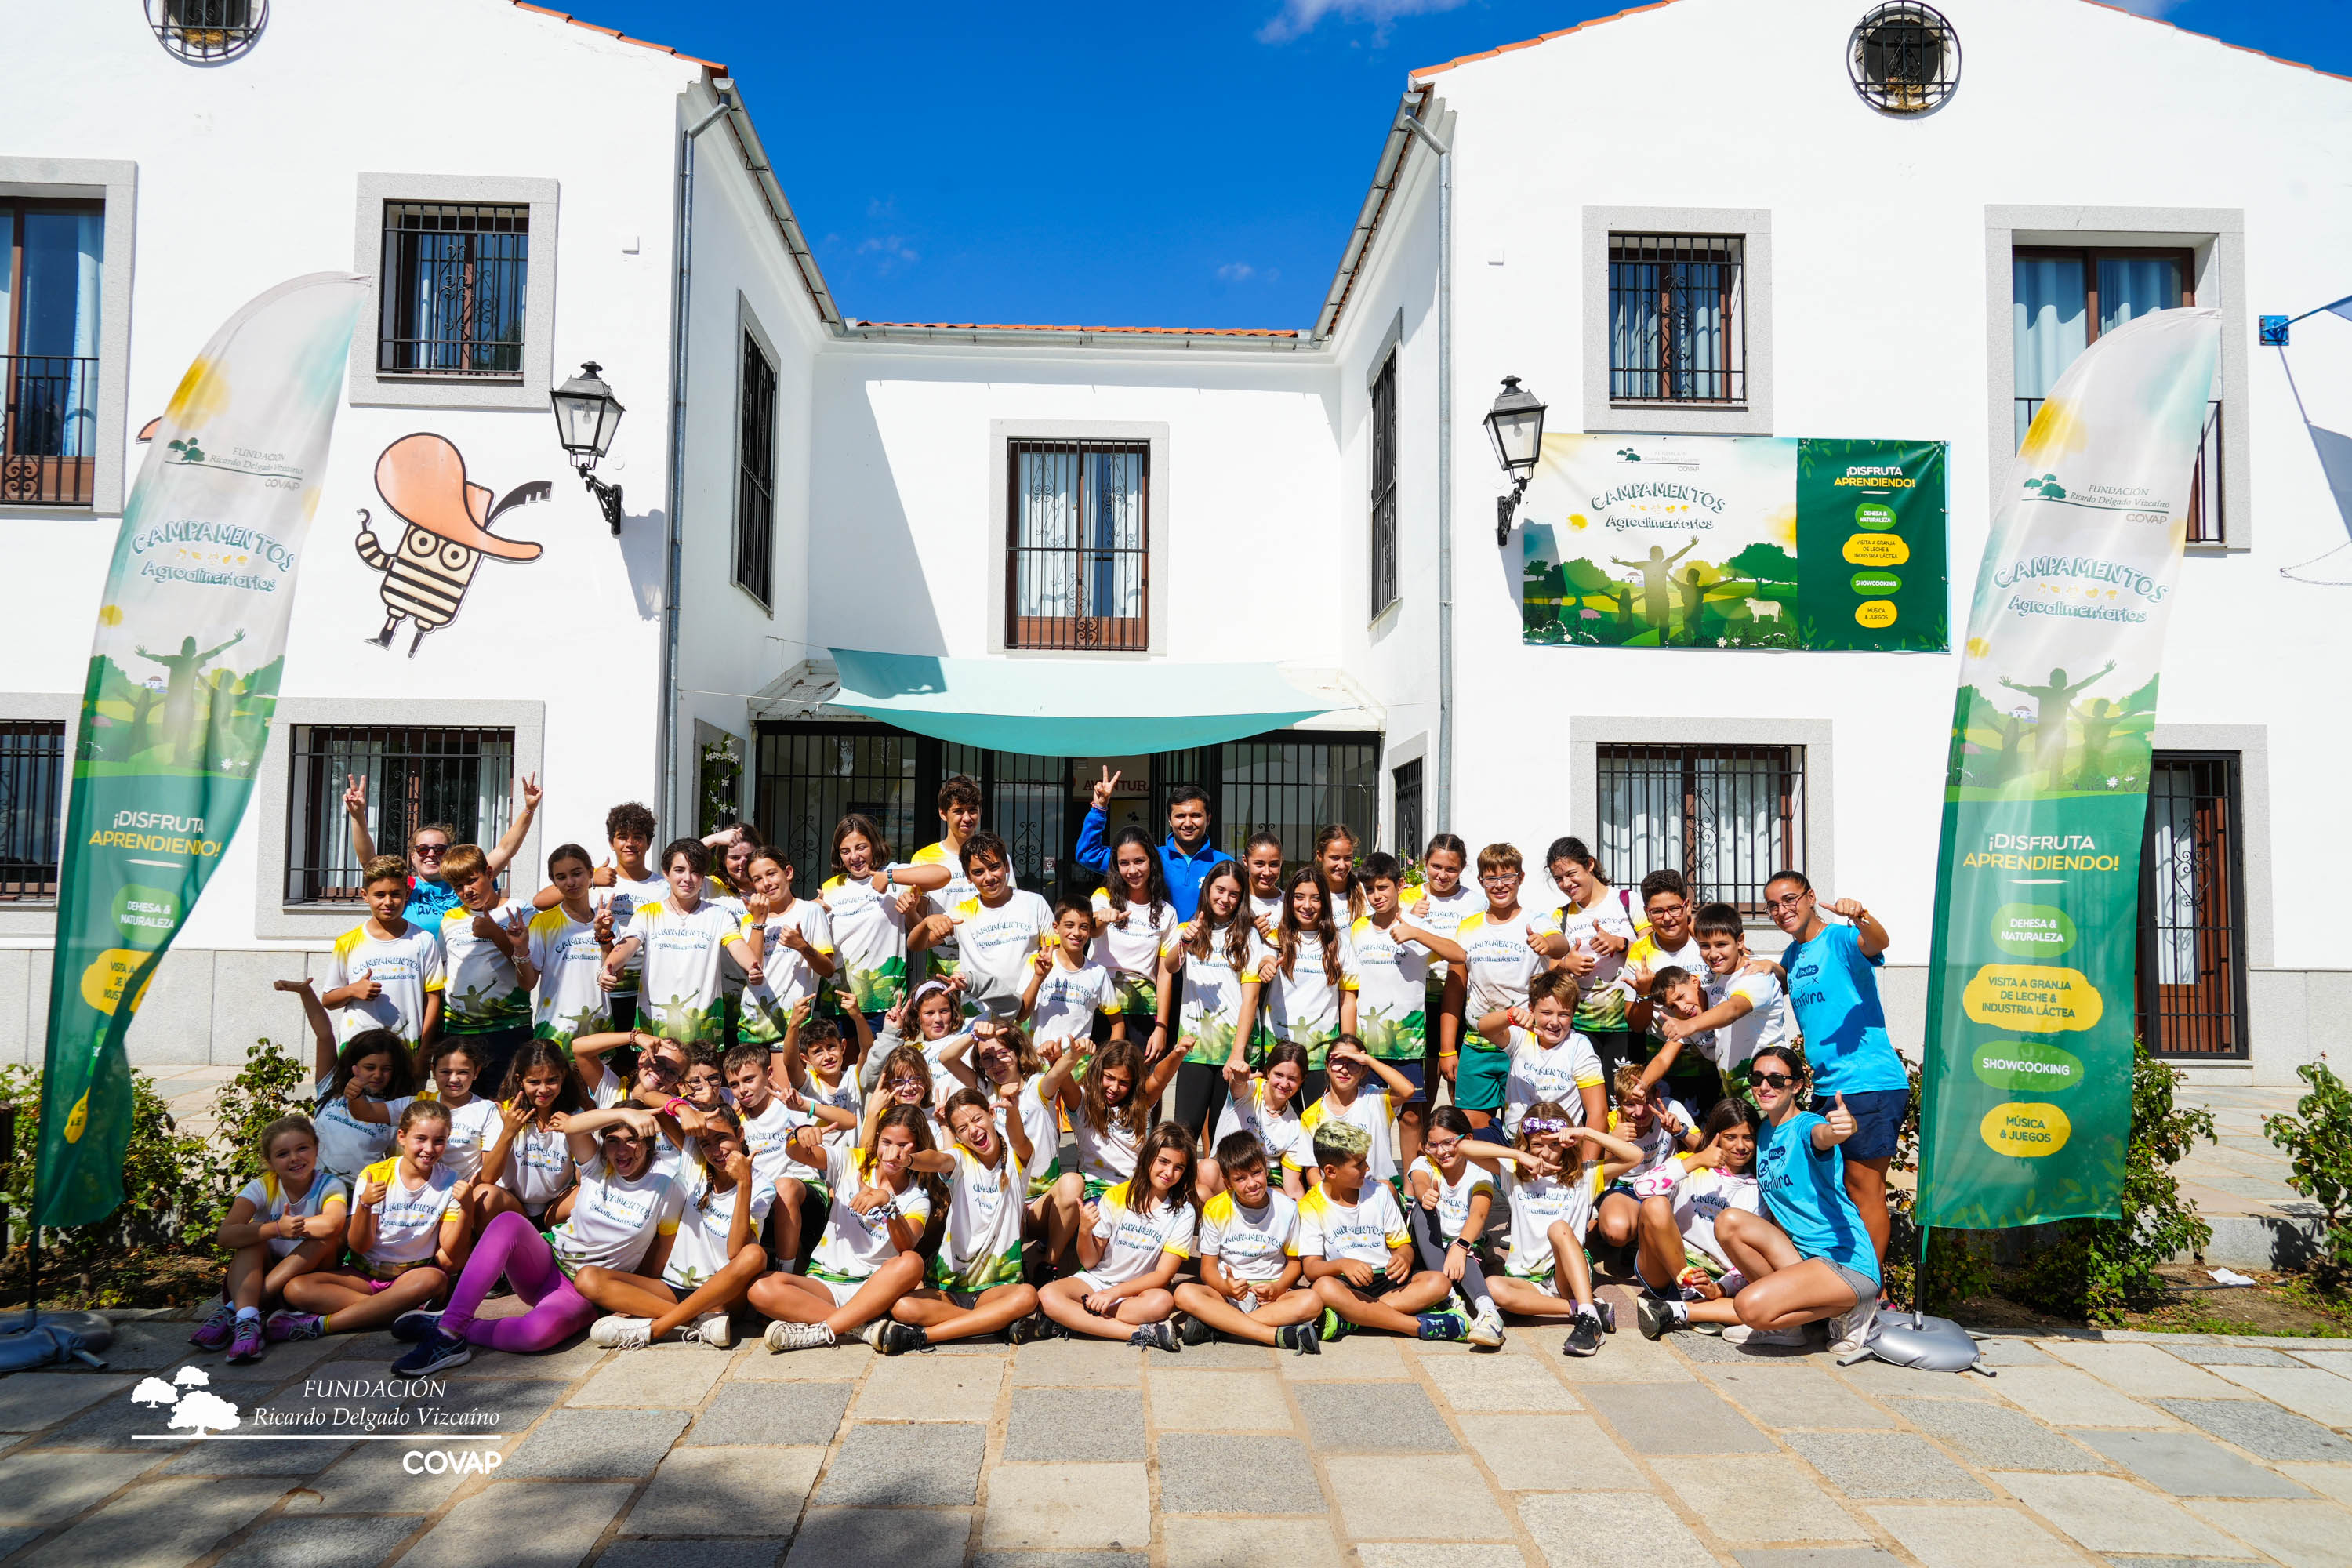 Campamentos agroalimentarios Fundación Ricardo Delgado Vizcaíno